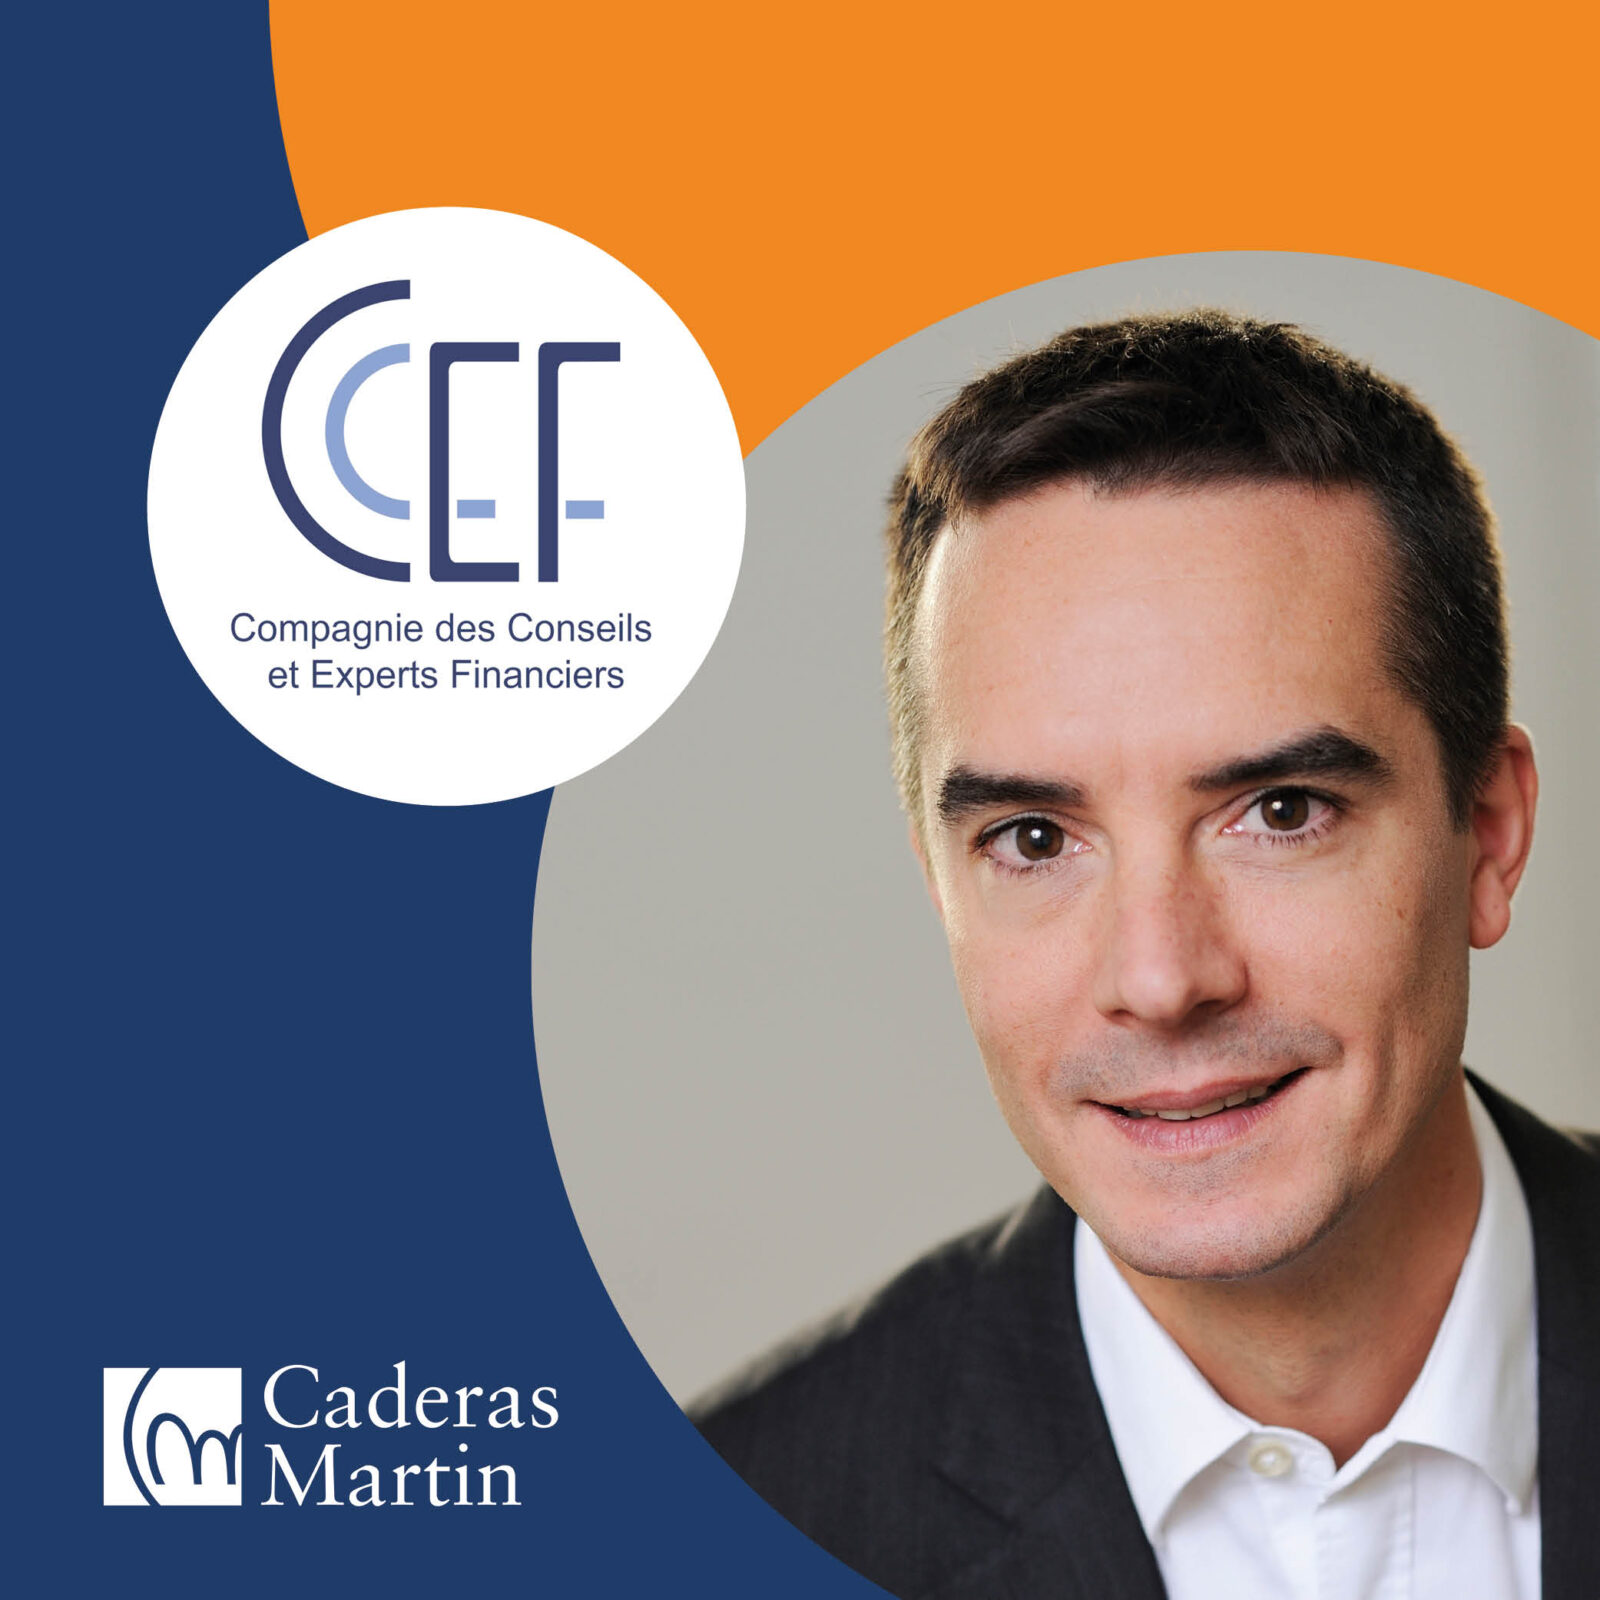 Fabrice Vidal est nommé administrateur de la CCEF - Caderas Martin